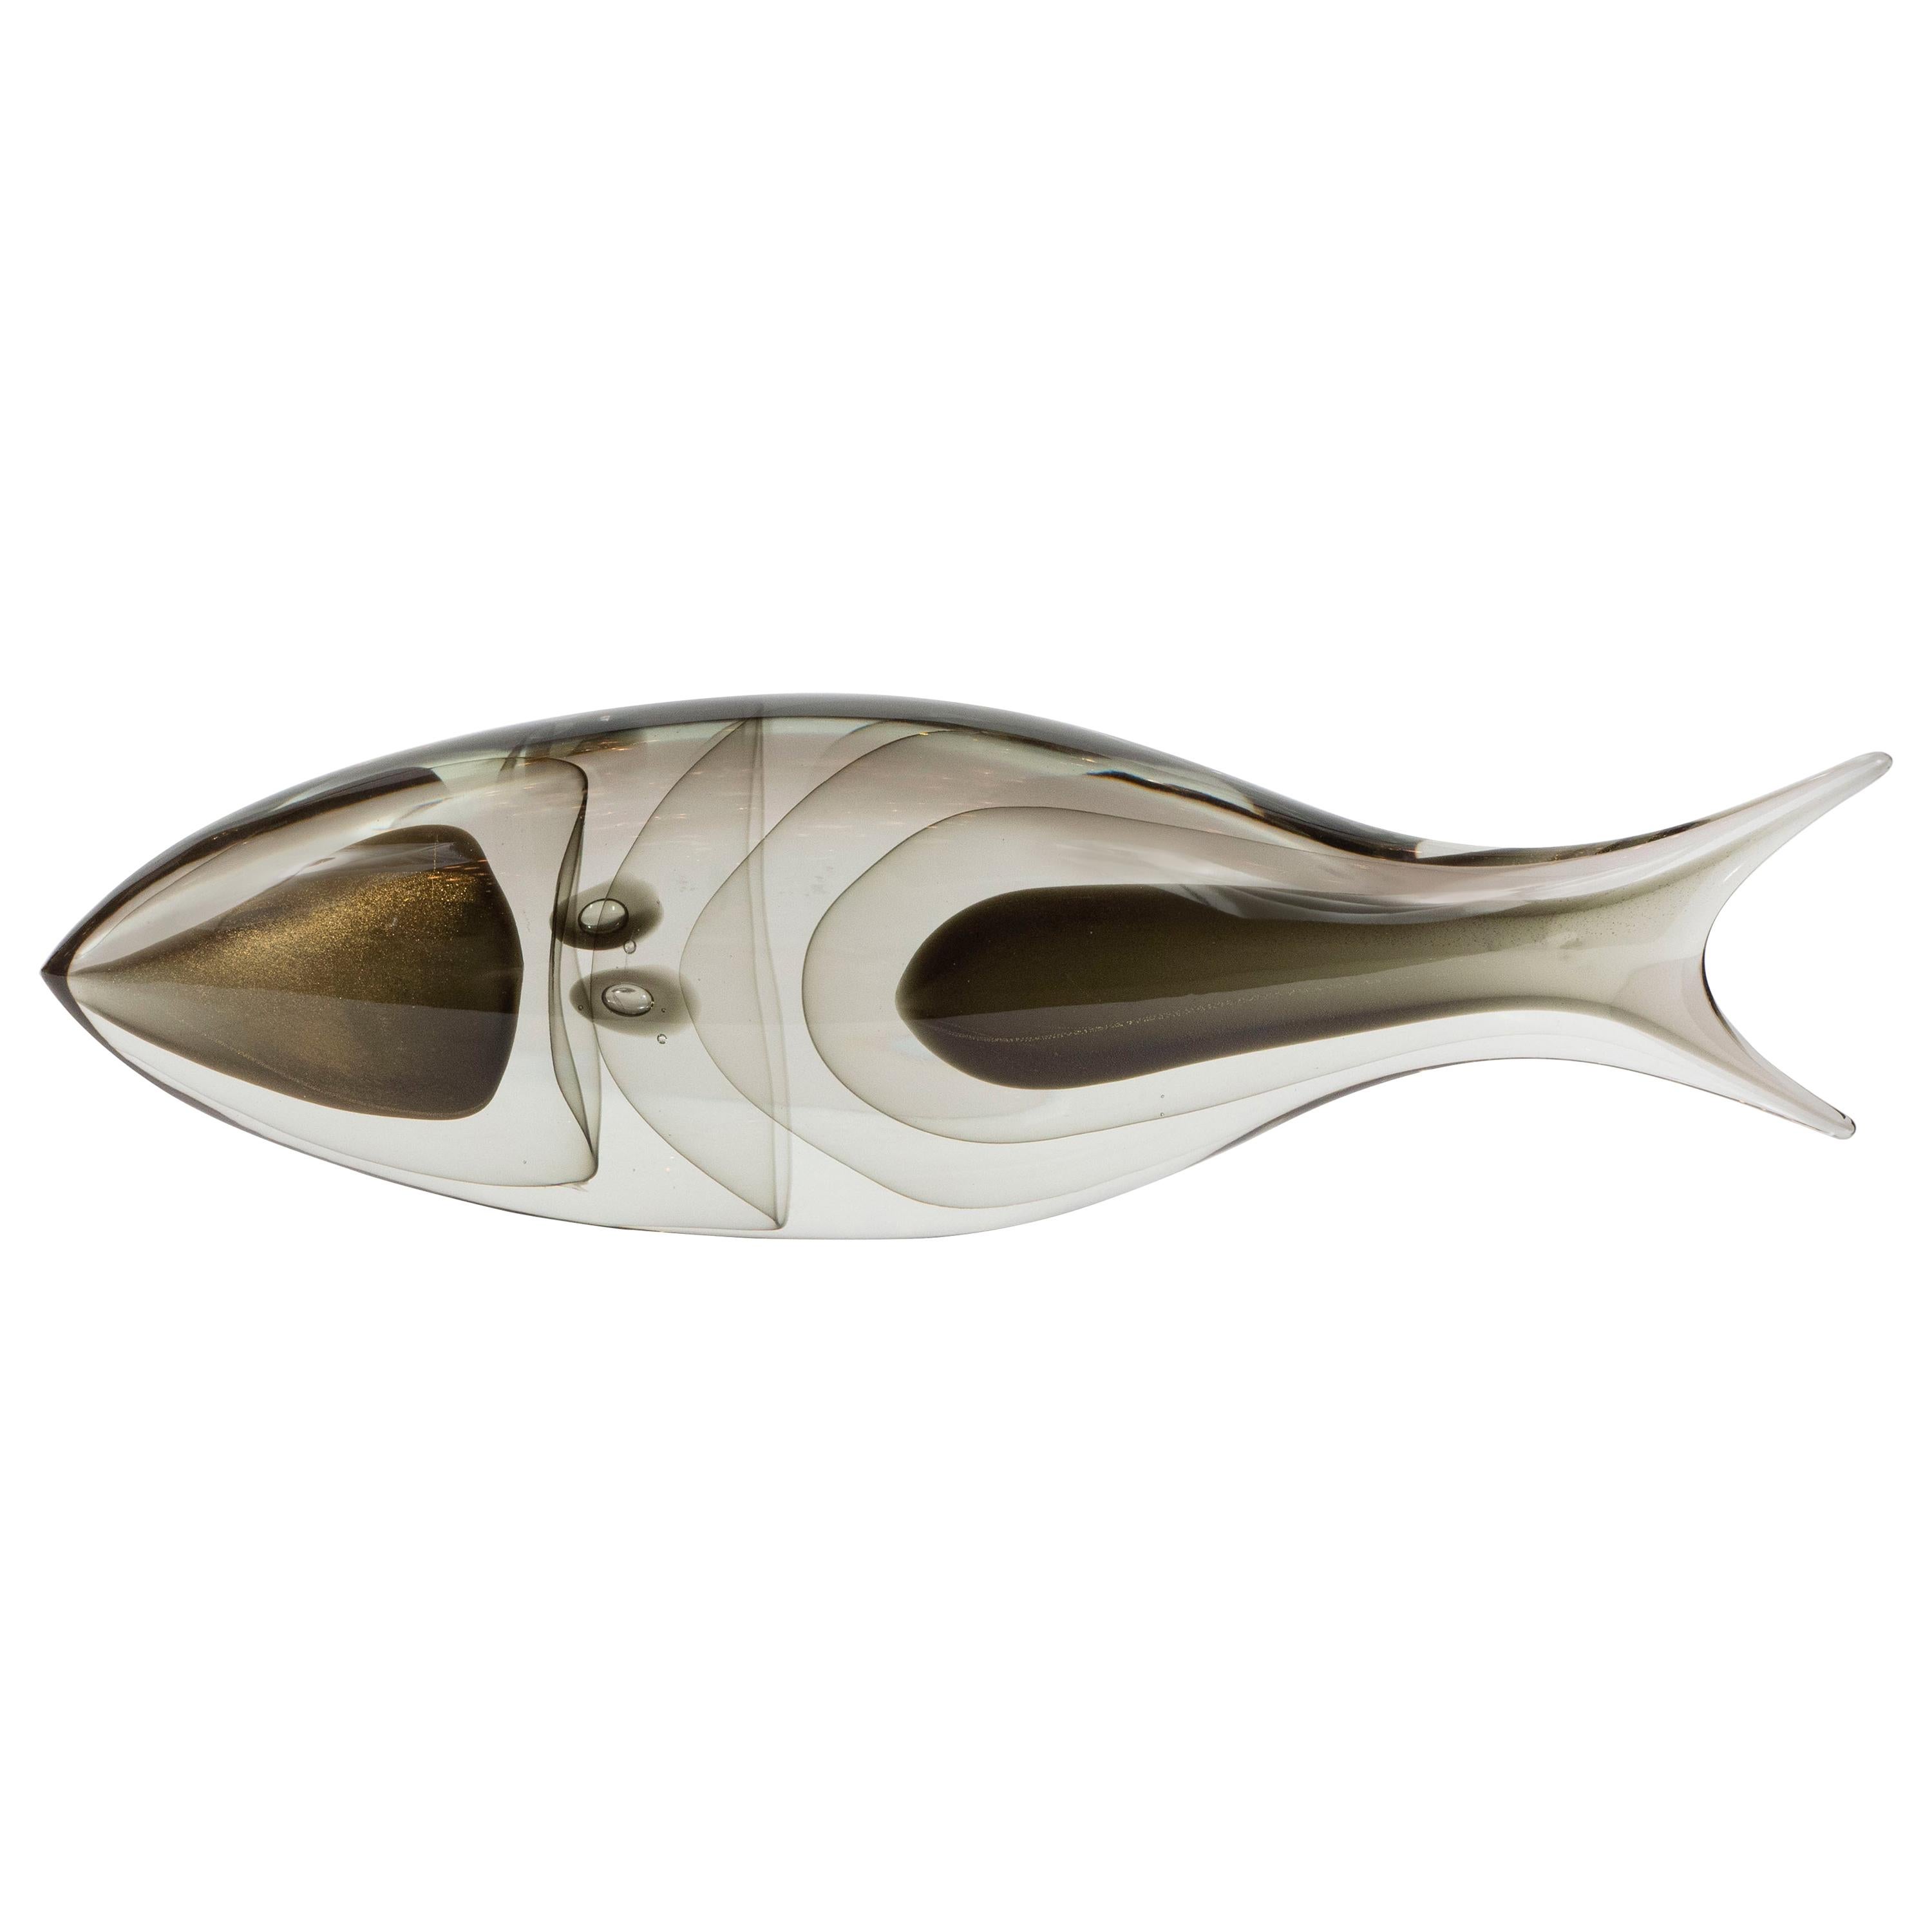 Modernist Stylized Fish Sculpture in Handblown Smoked & Translucent Murano Glass